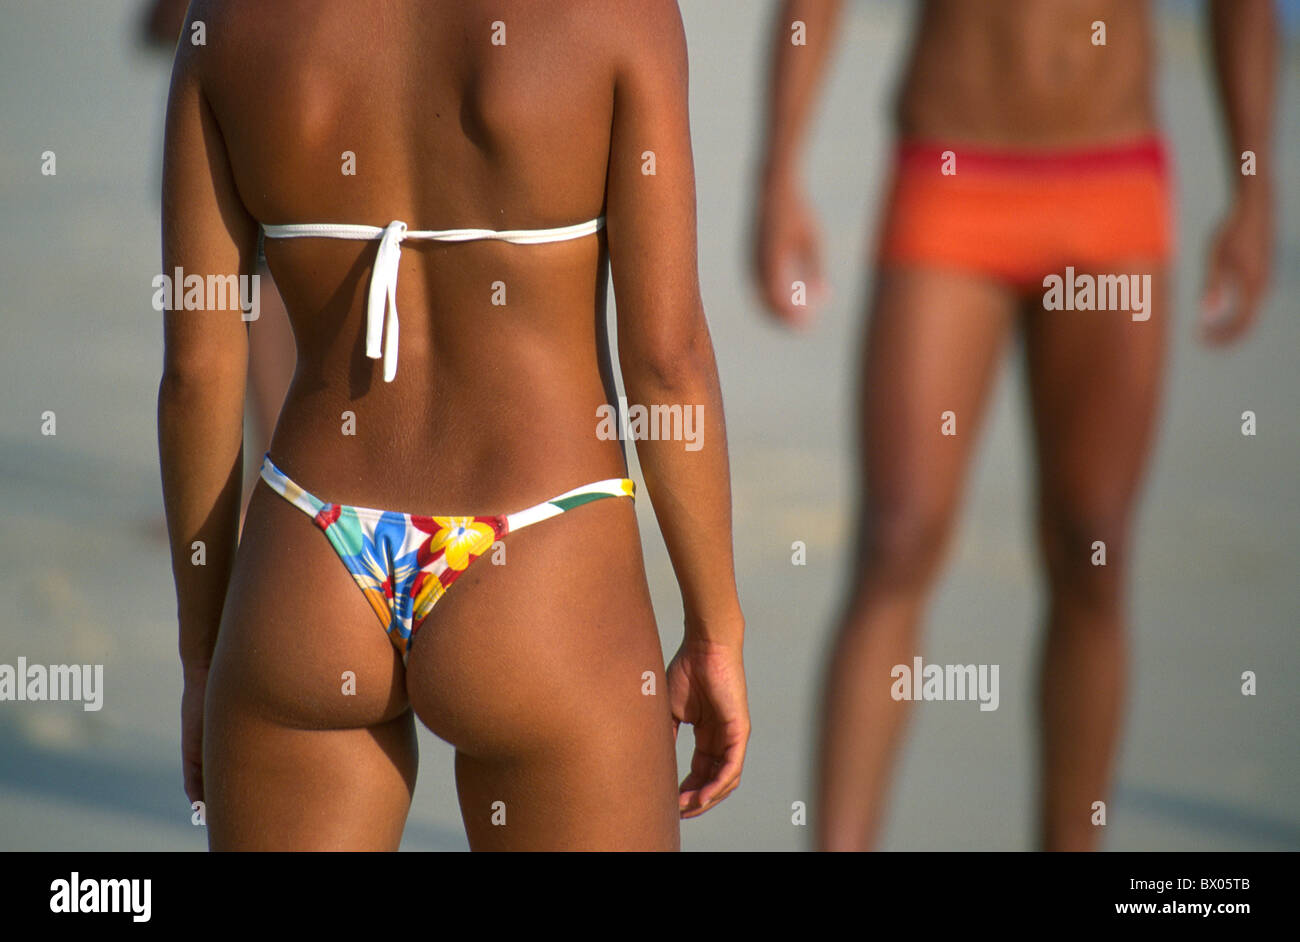 Rio de janeiro ipanema bikini hi-res stock photography and images